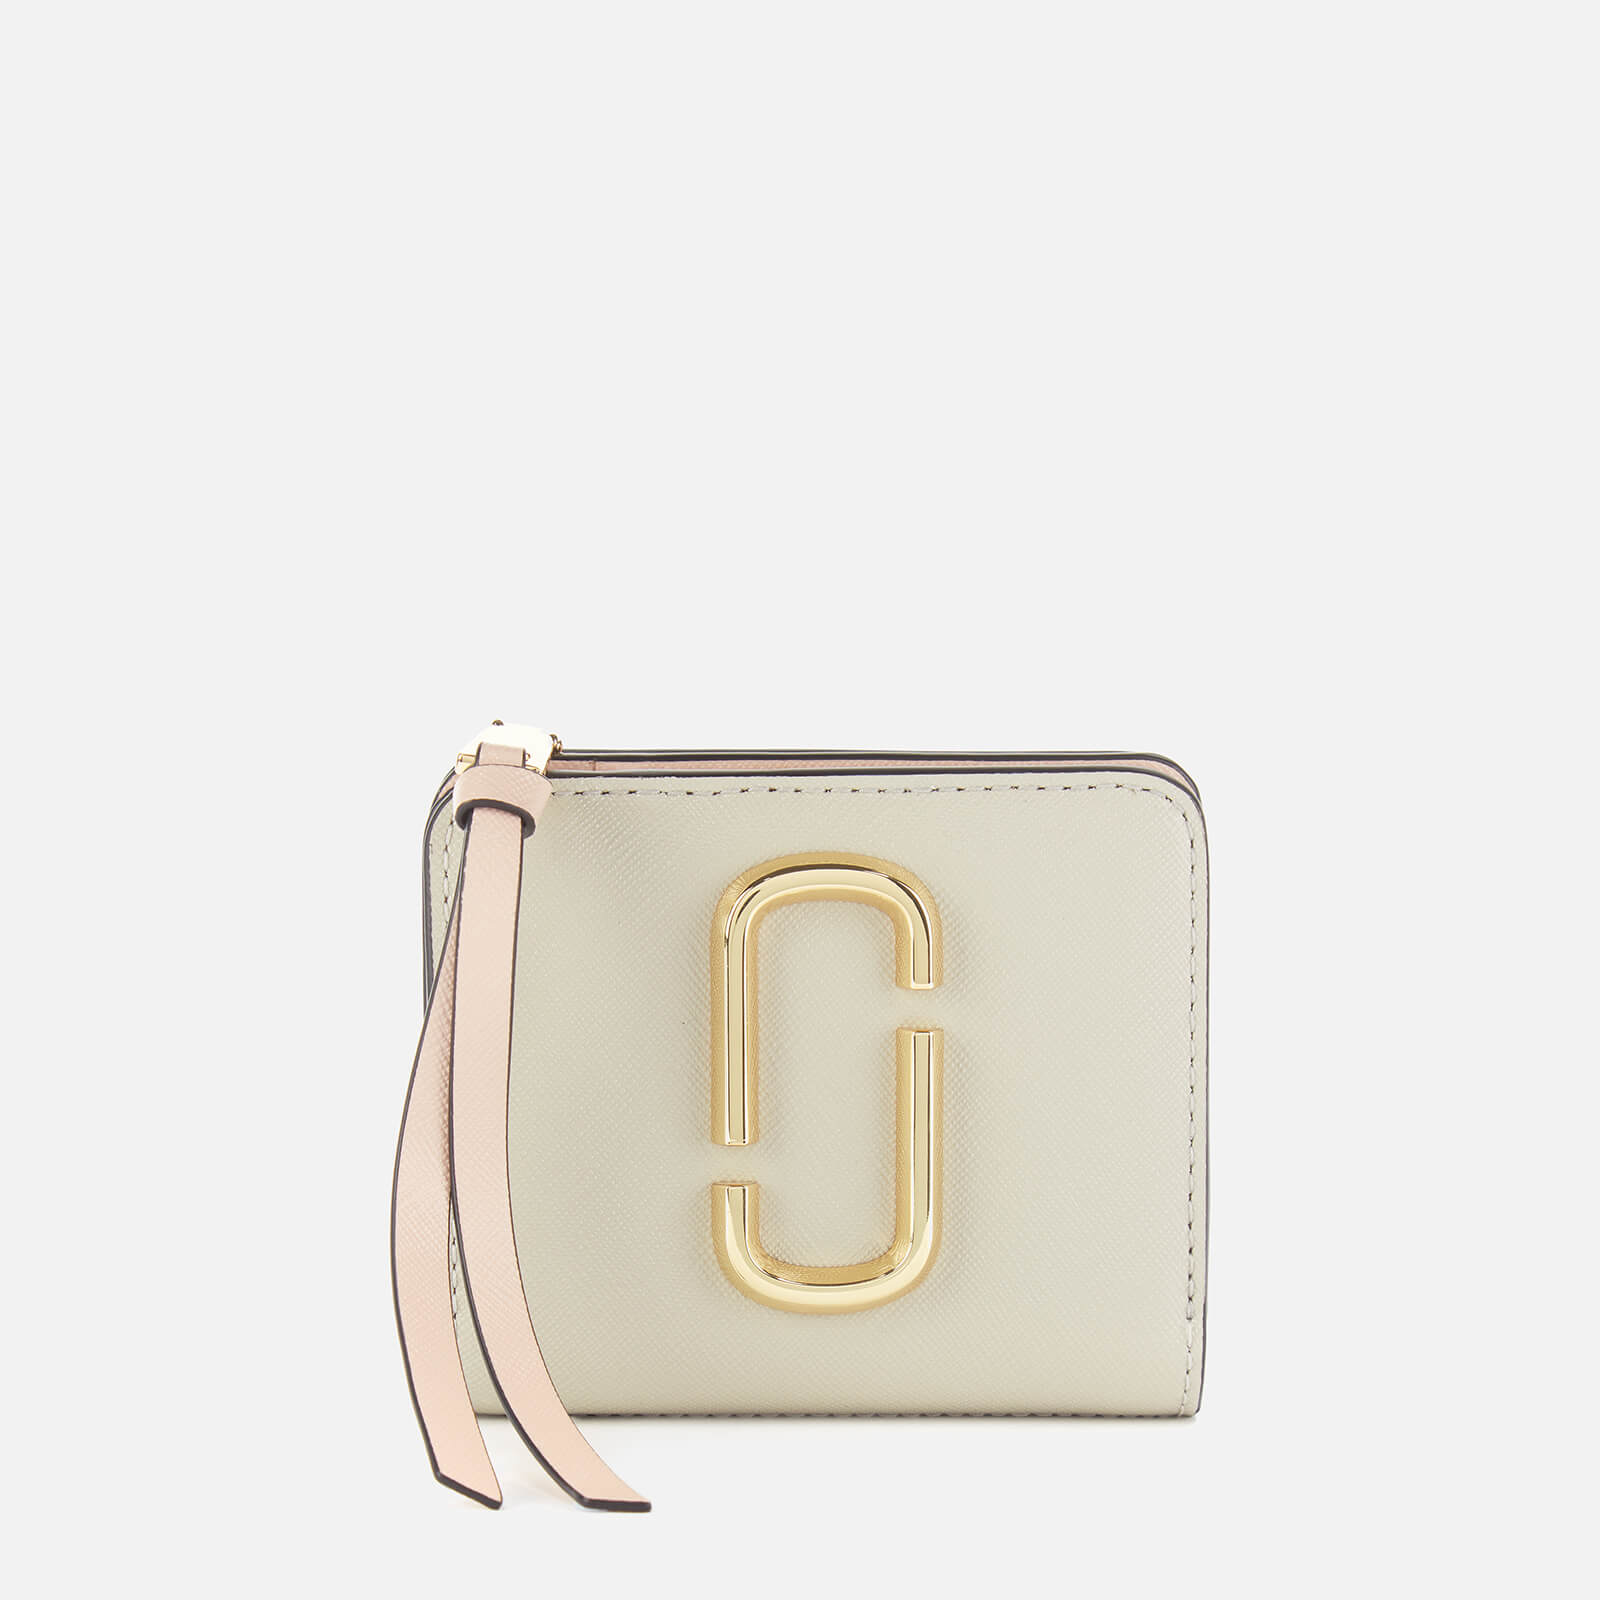 Marc Jacobs Women's Mini Compact Wallet - Dust Multi